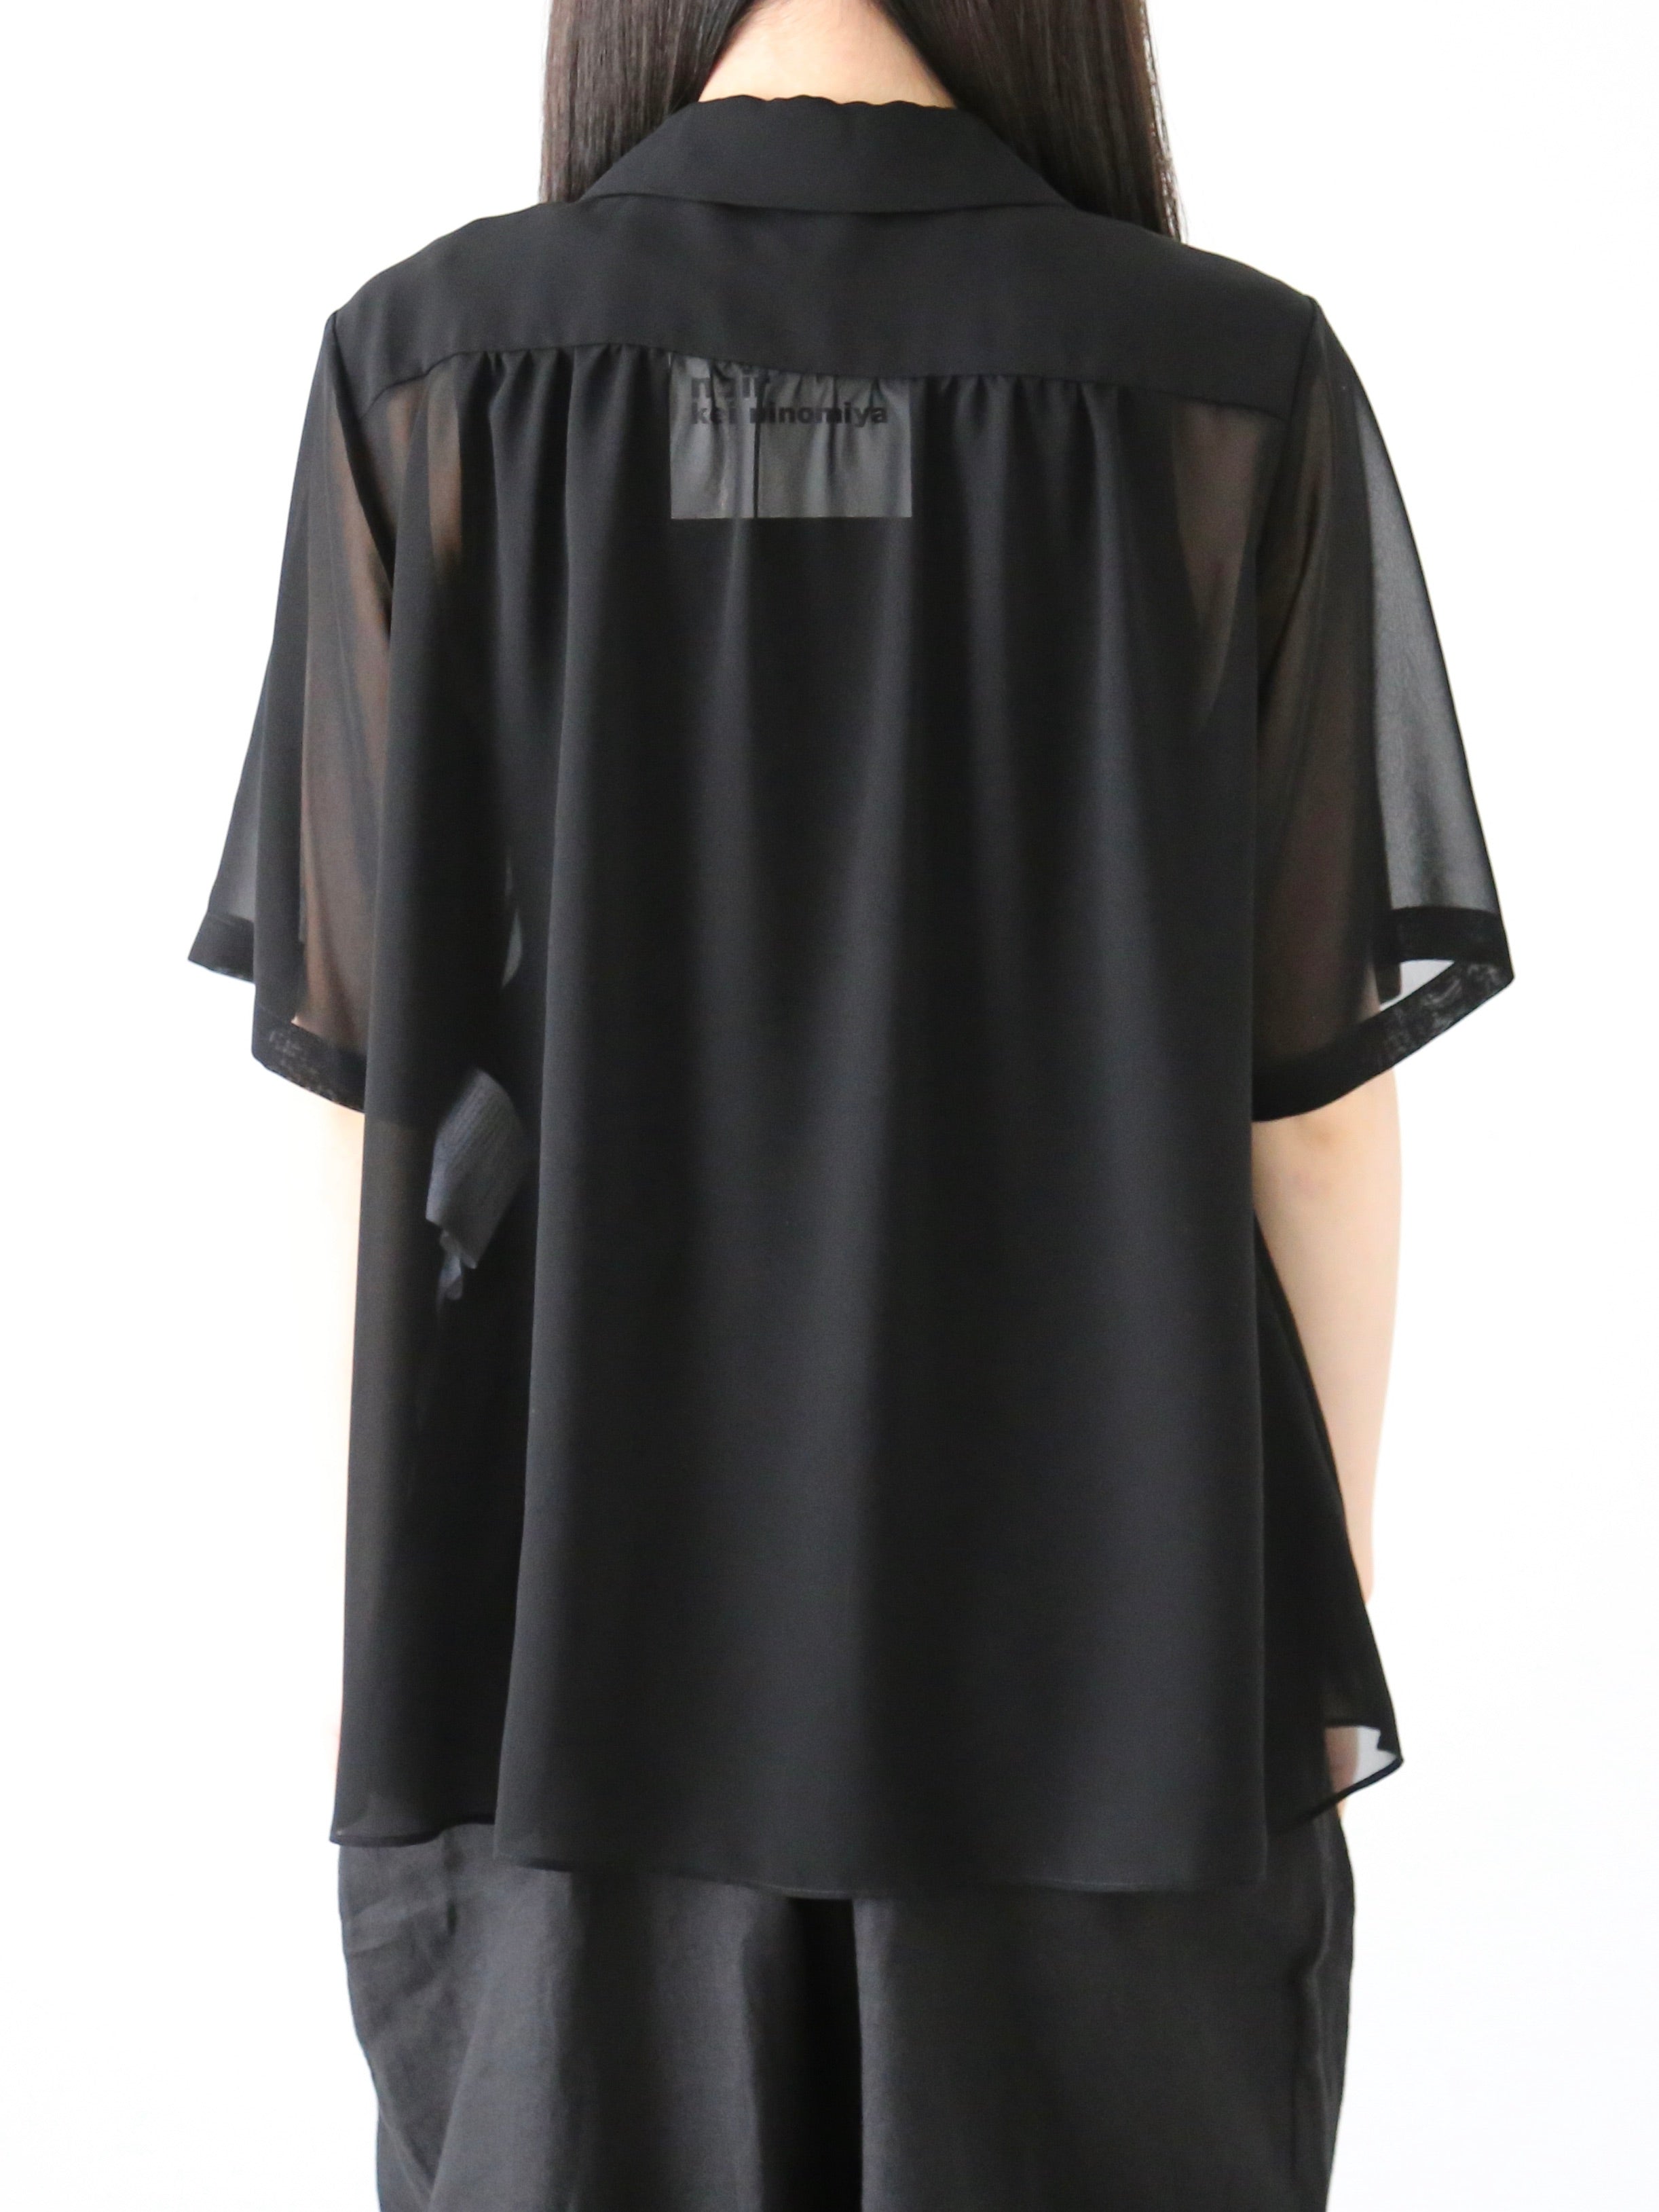 noir kei ninomiya エステルジョーゼットシャツ [3M-B015-051]